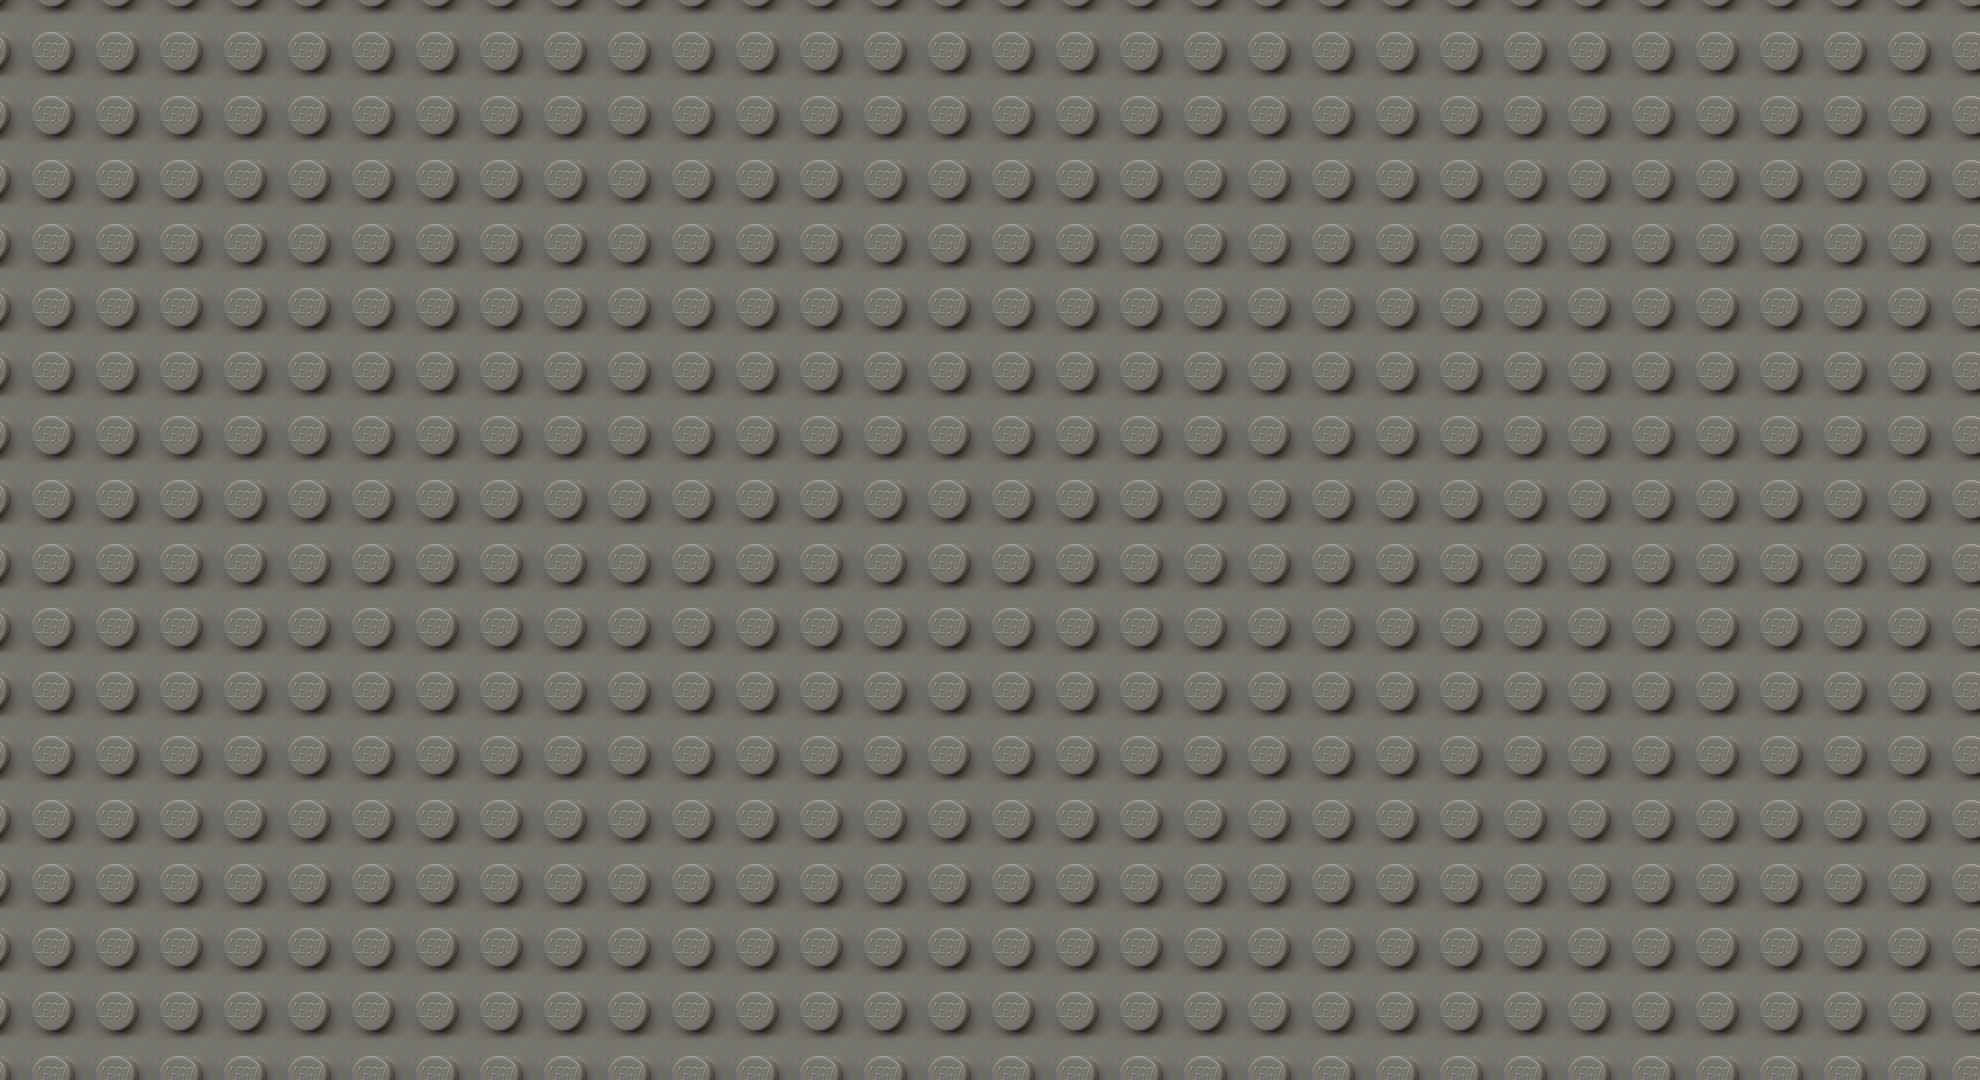 Lego Wallpaper Resolution 1980x1080 Id 4671 Wallha Com